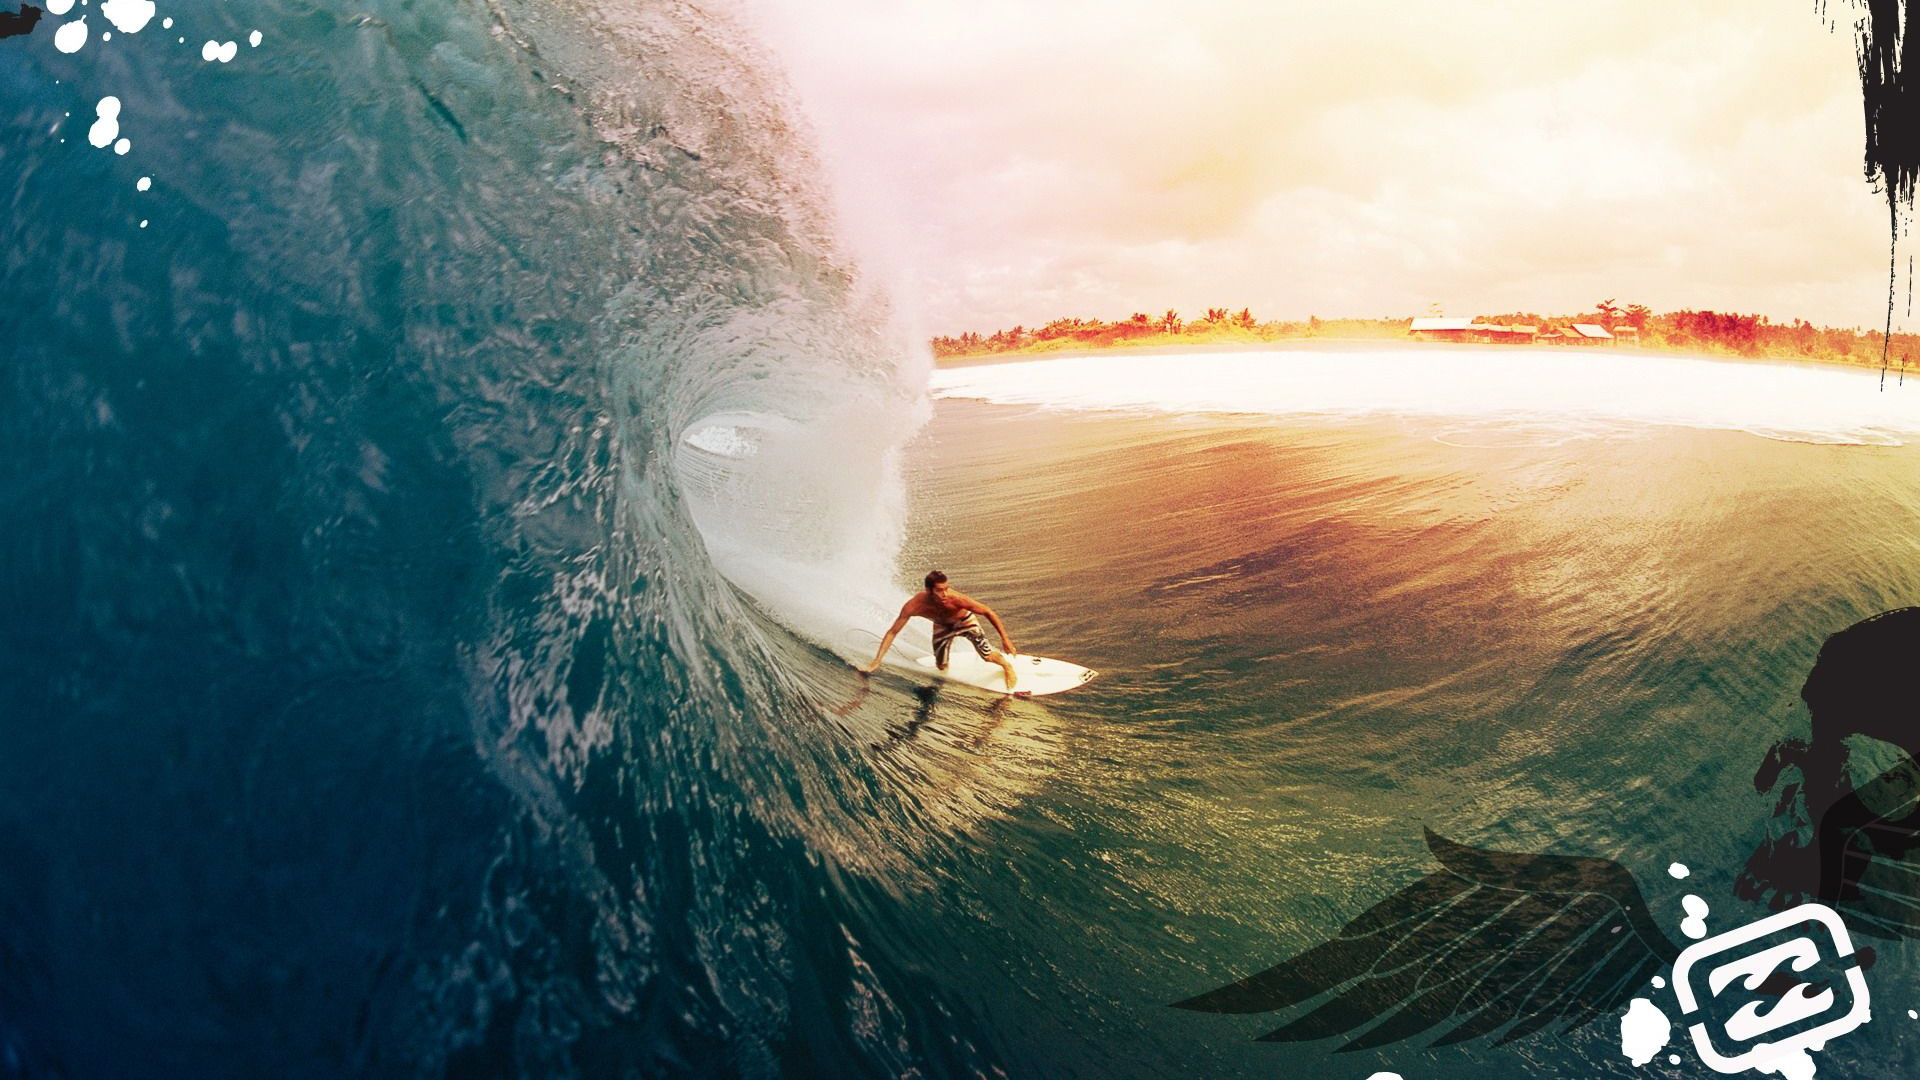 Surfer Surfing 1080p Full HD Desktop Background Wallpaper